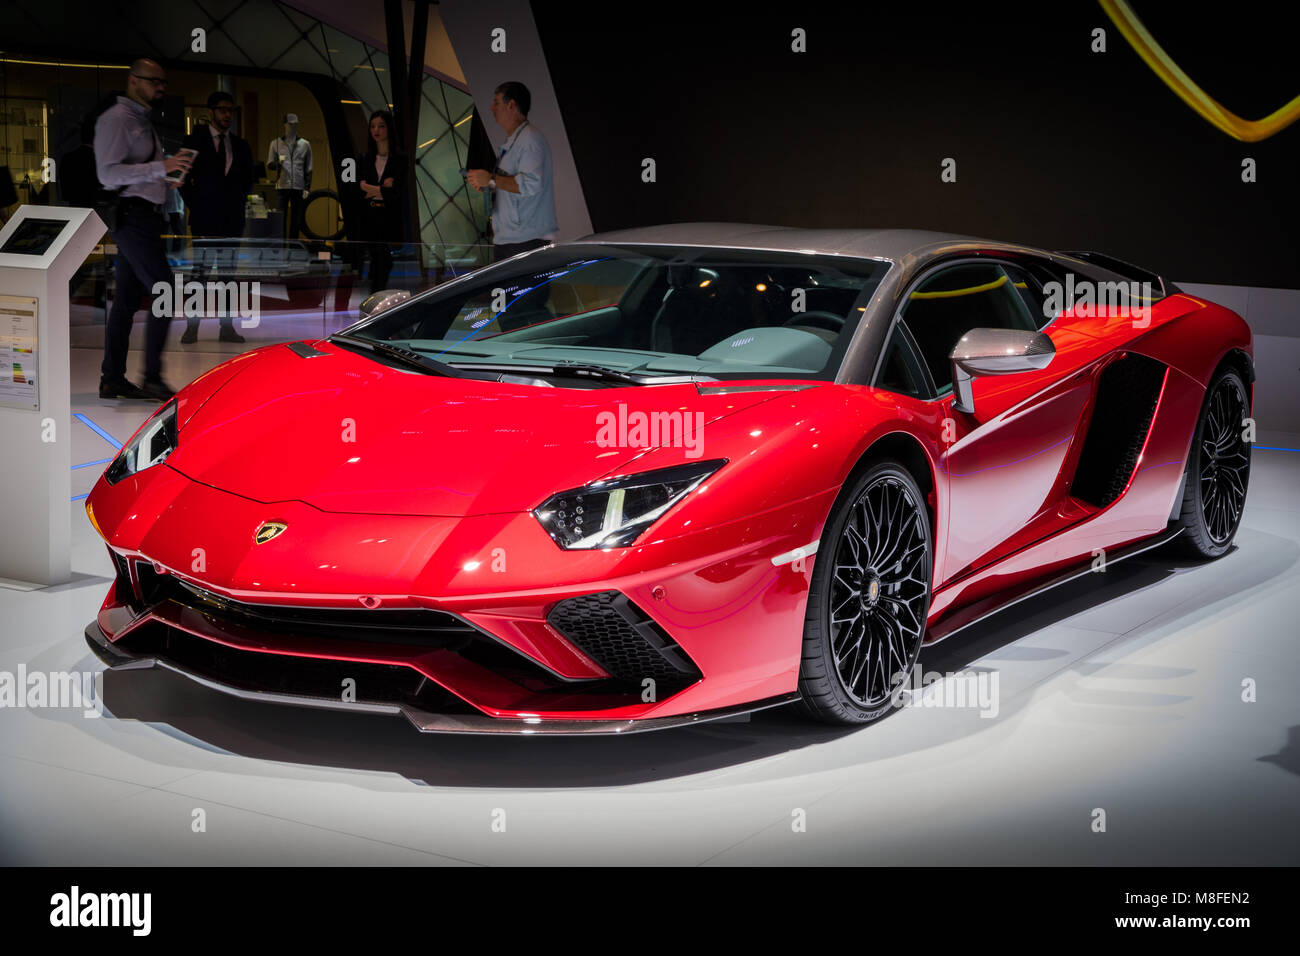 Lamborghini car hi-res stock photography and images - Alamy